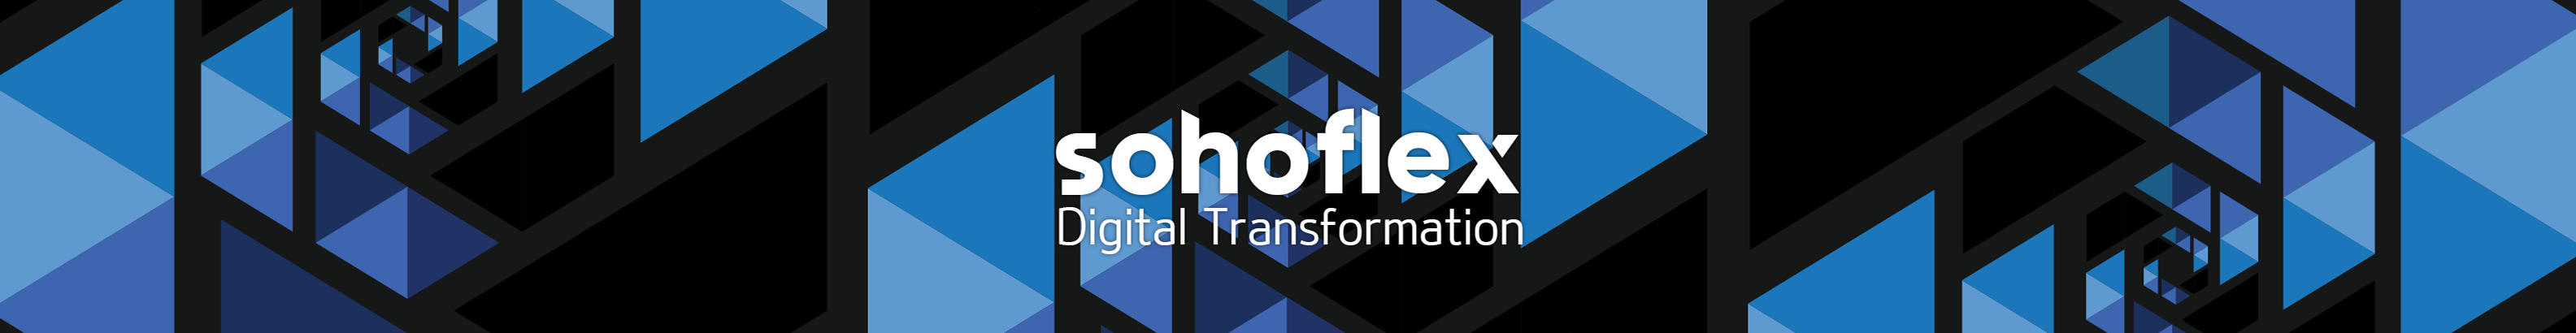 Sohoflex Web Agency's profile banner